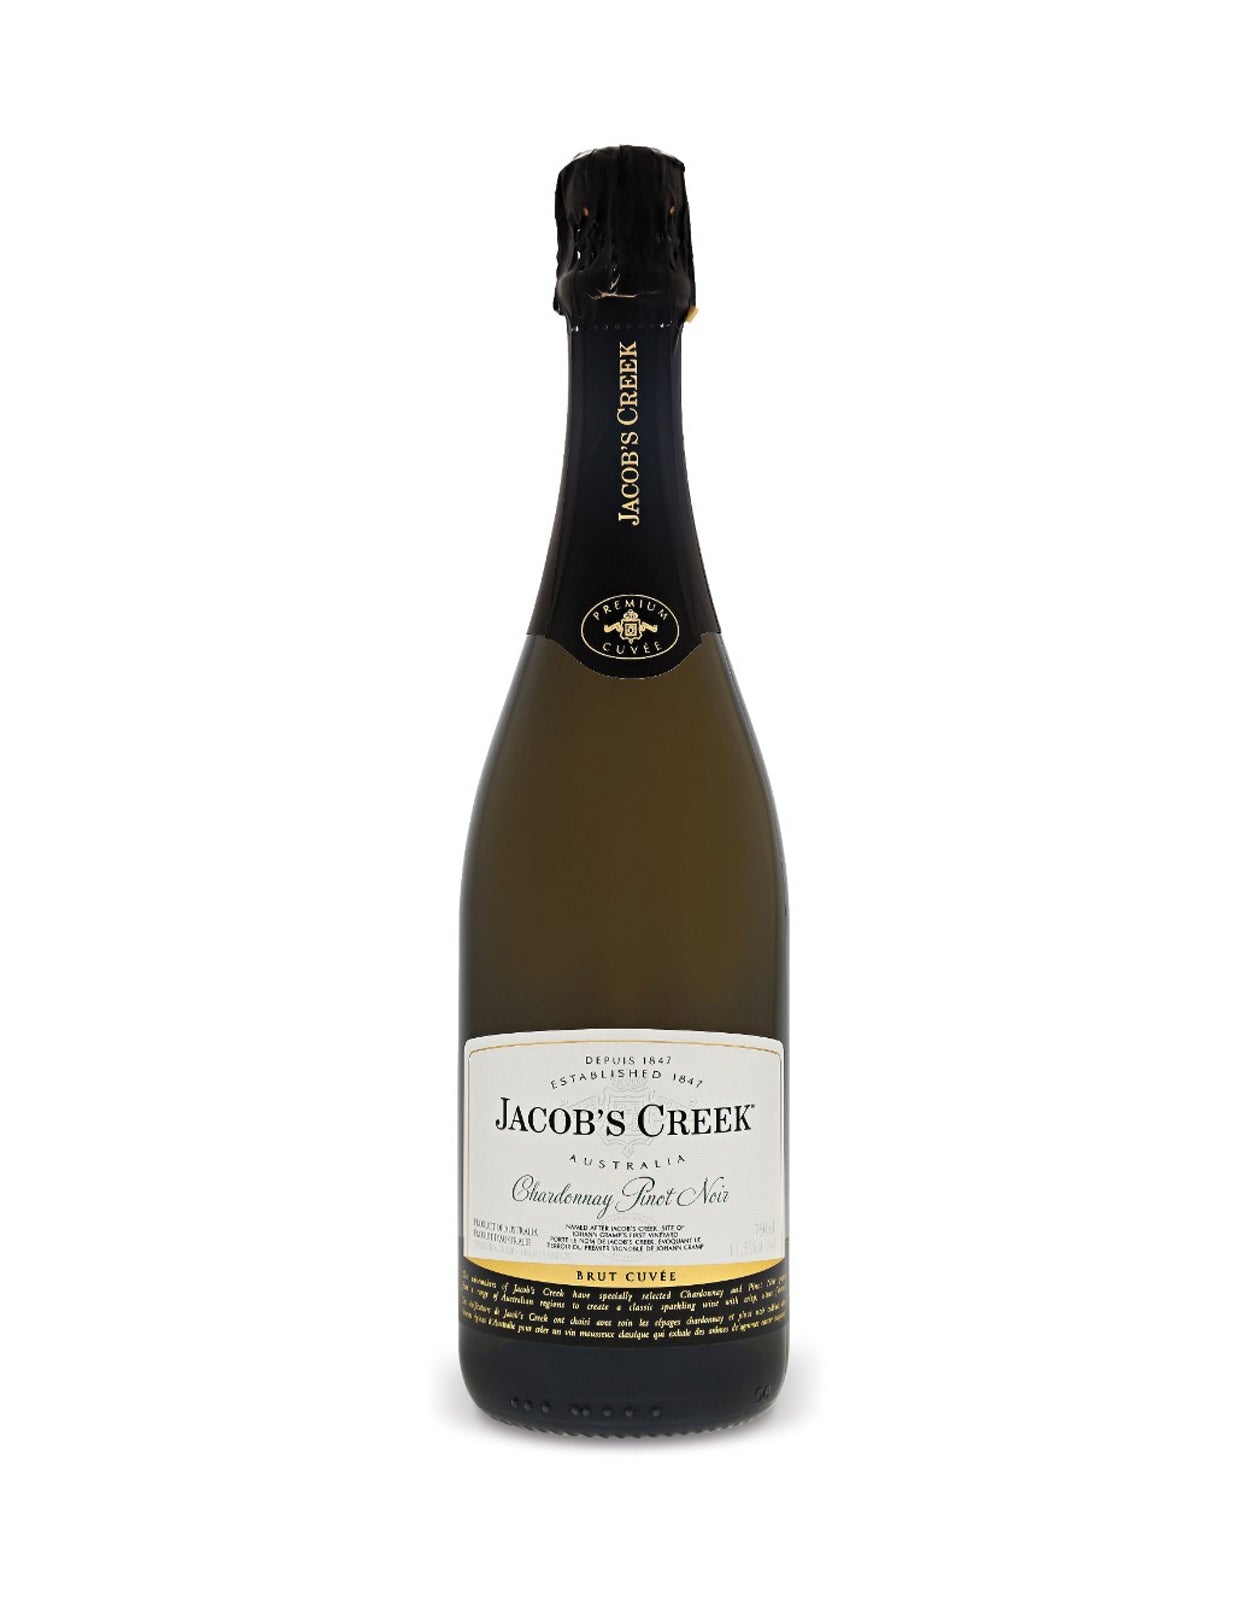 Jacob's Creek Reserve Chardonnay-Pinot Noir Cuvee (NV)